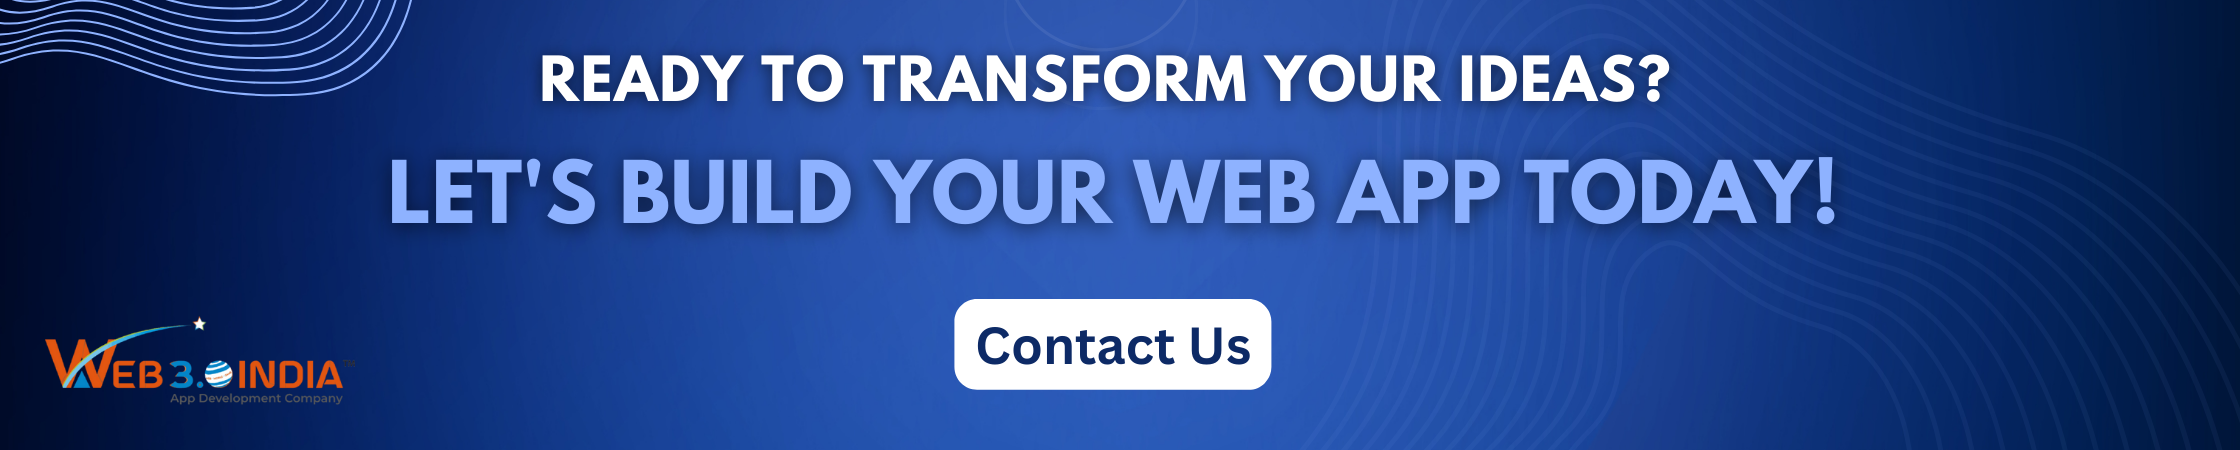 Website Development Services - Web 3.0 India